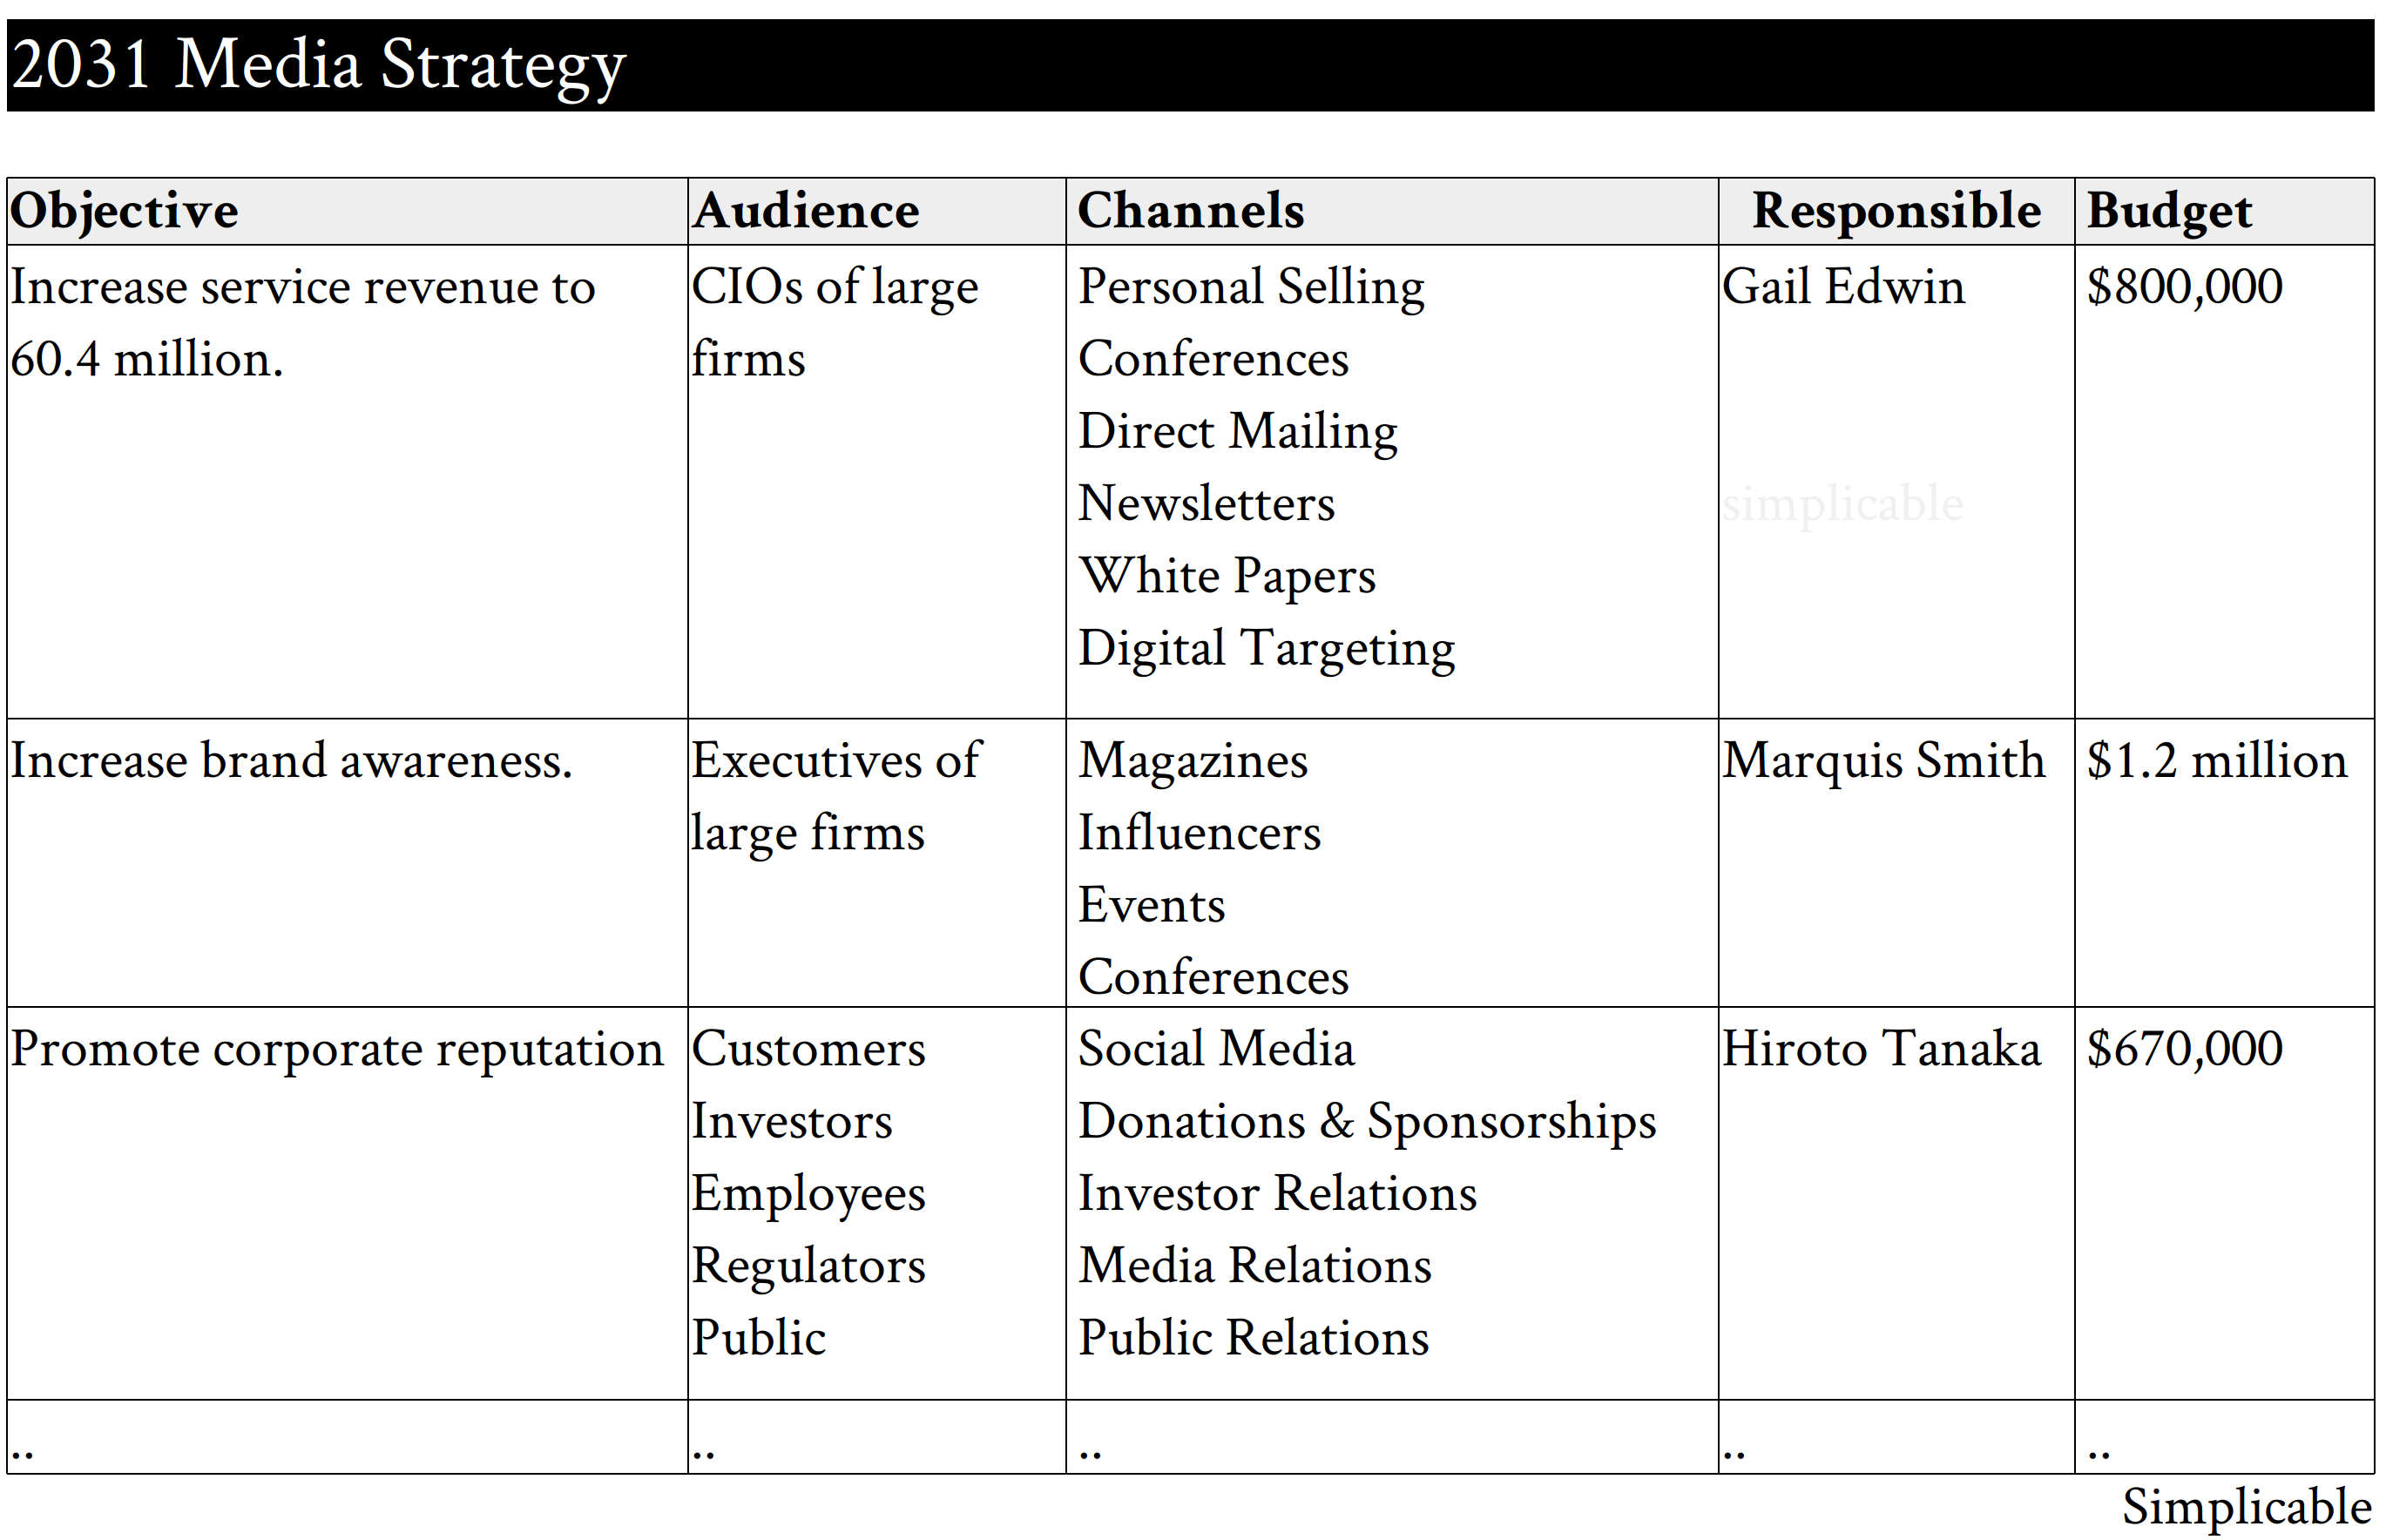 Media Strategy By Objective